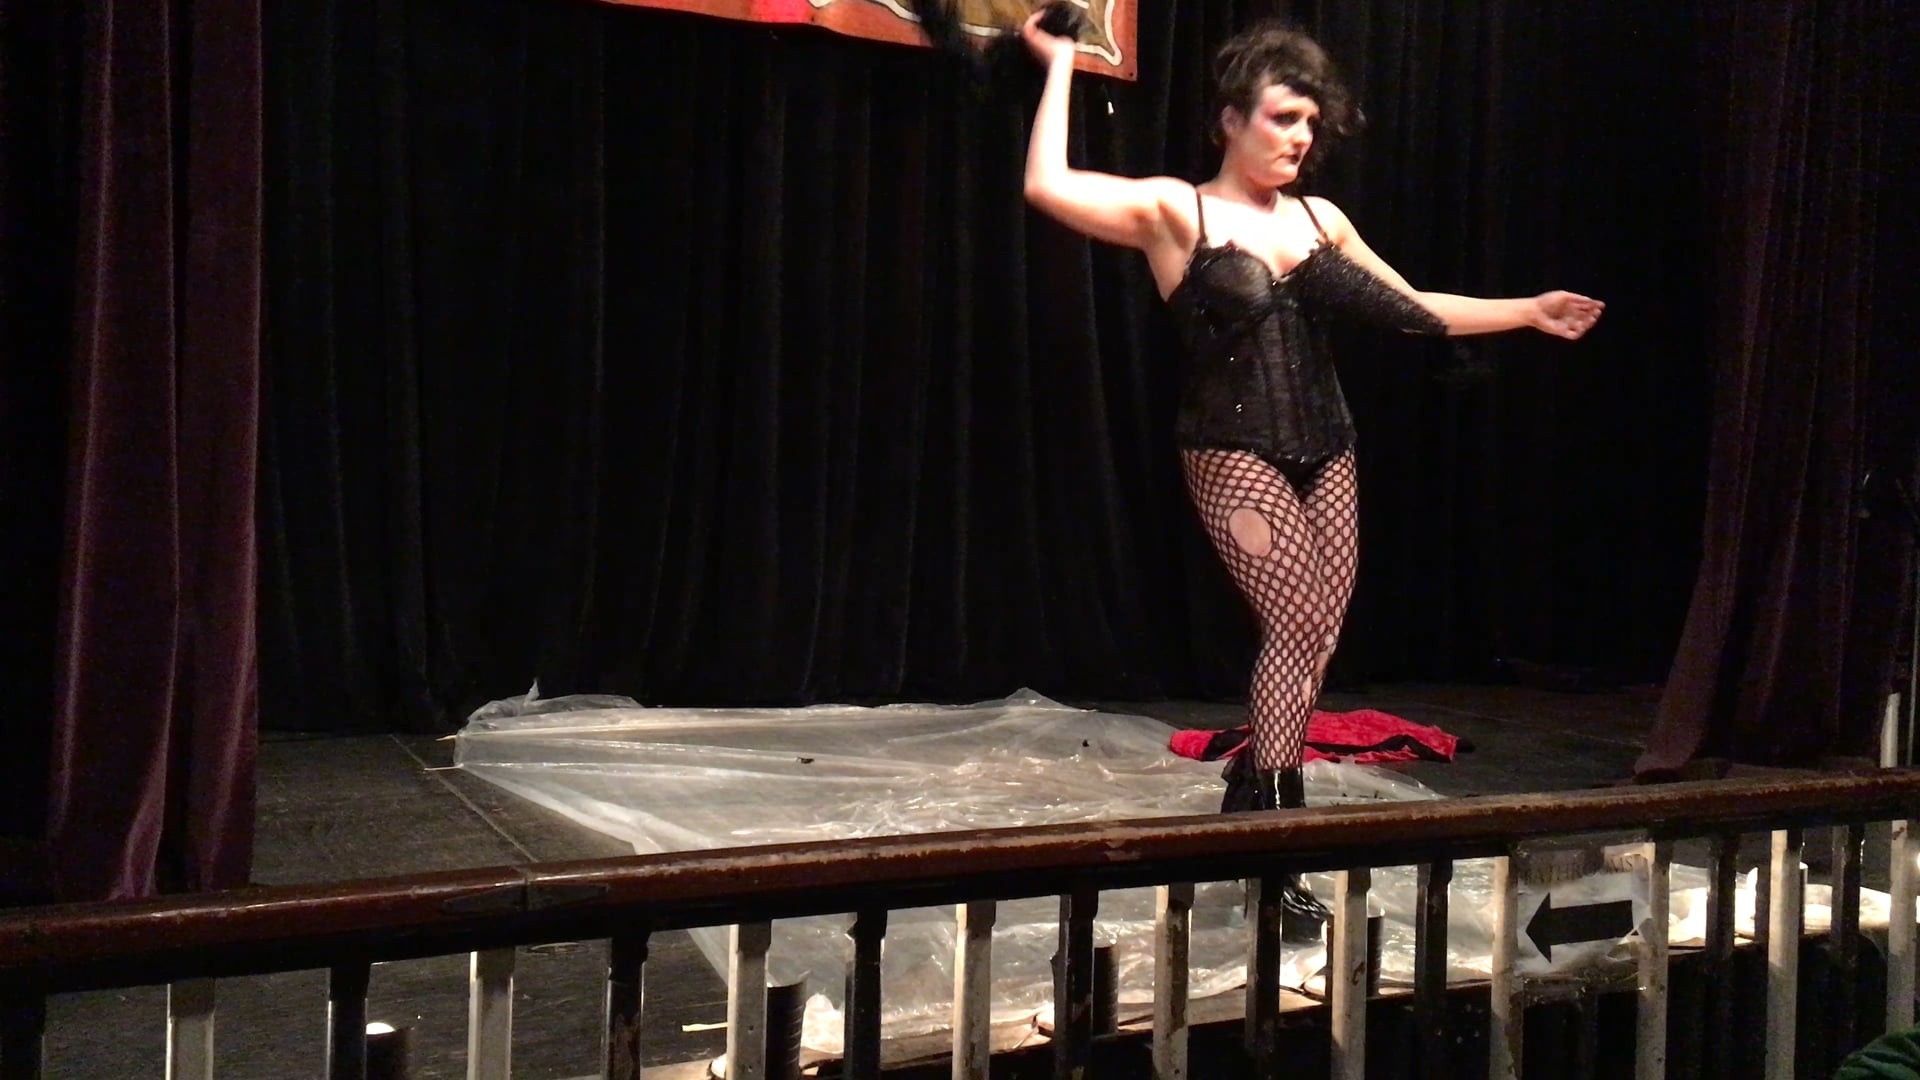 Tila Von Twirl Performs Erotica at Coney Island